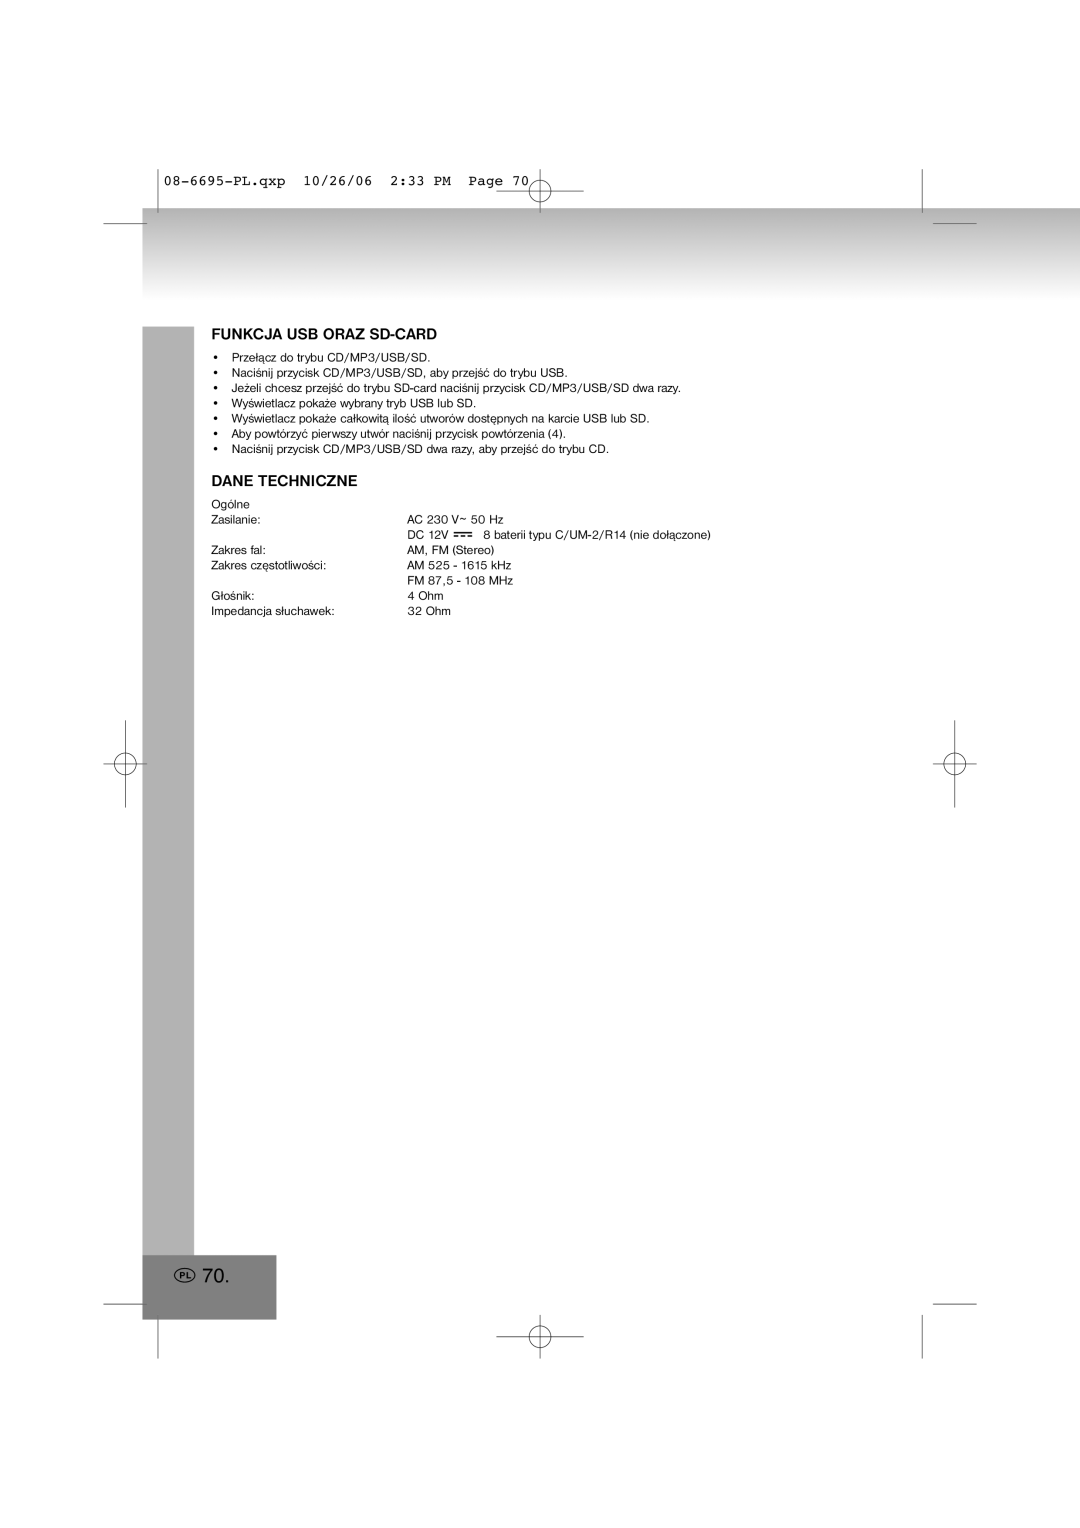 Elta manual Funkcja Usb Oraz Sd-Card, Dane Techniczne, 08-6695-PL.qxp10/26/06 2 33 PM Page 